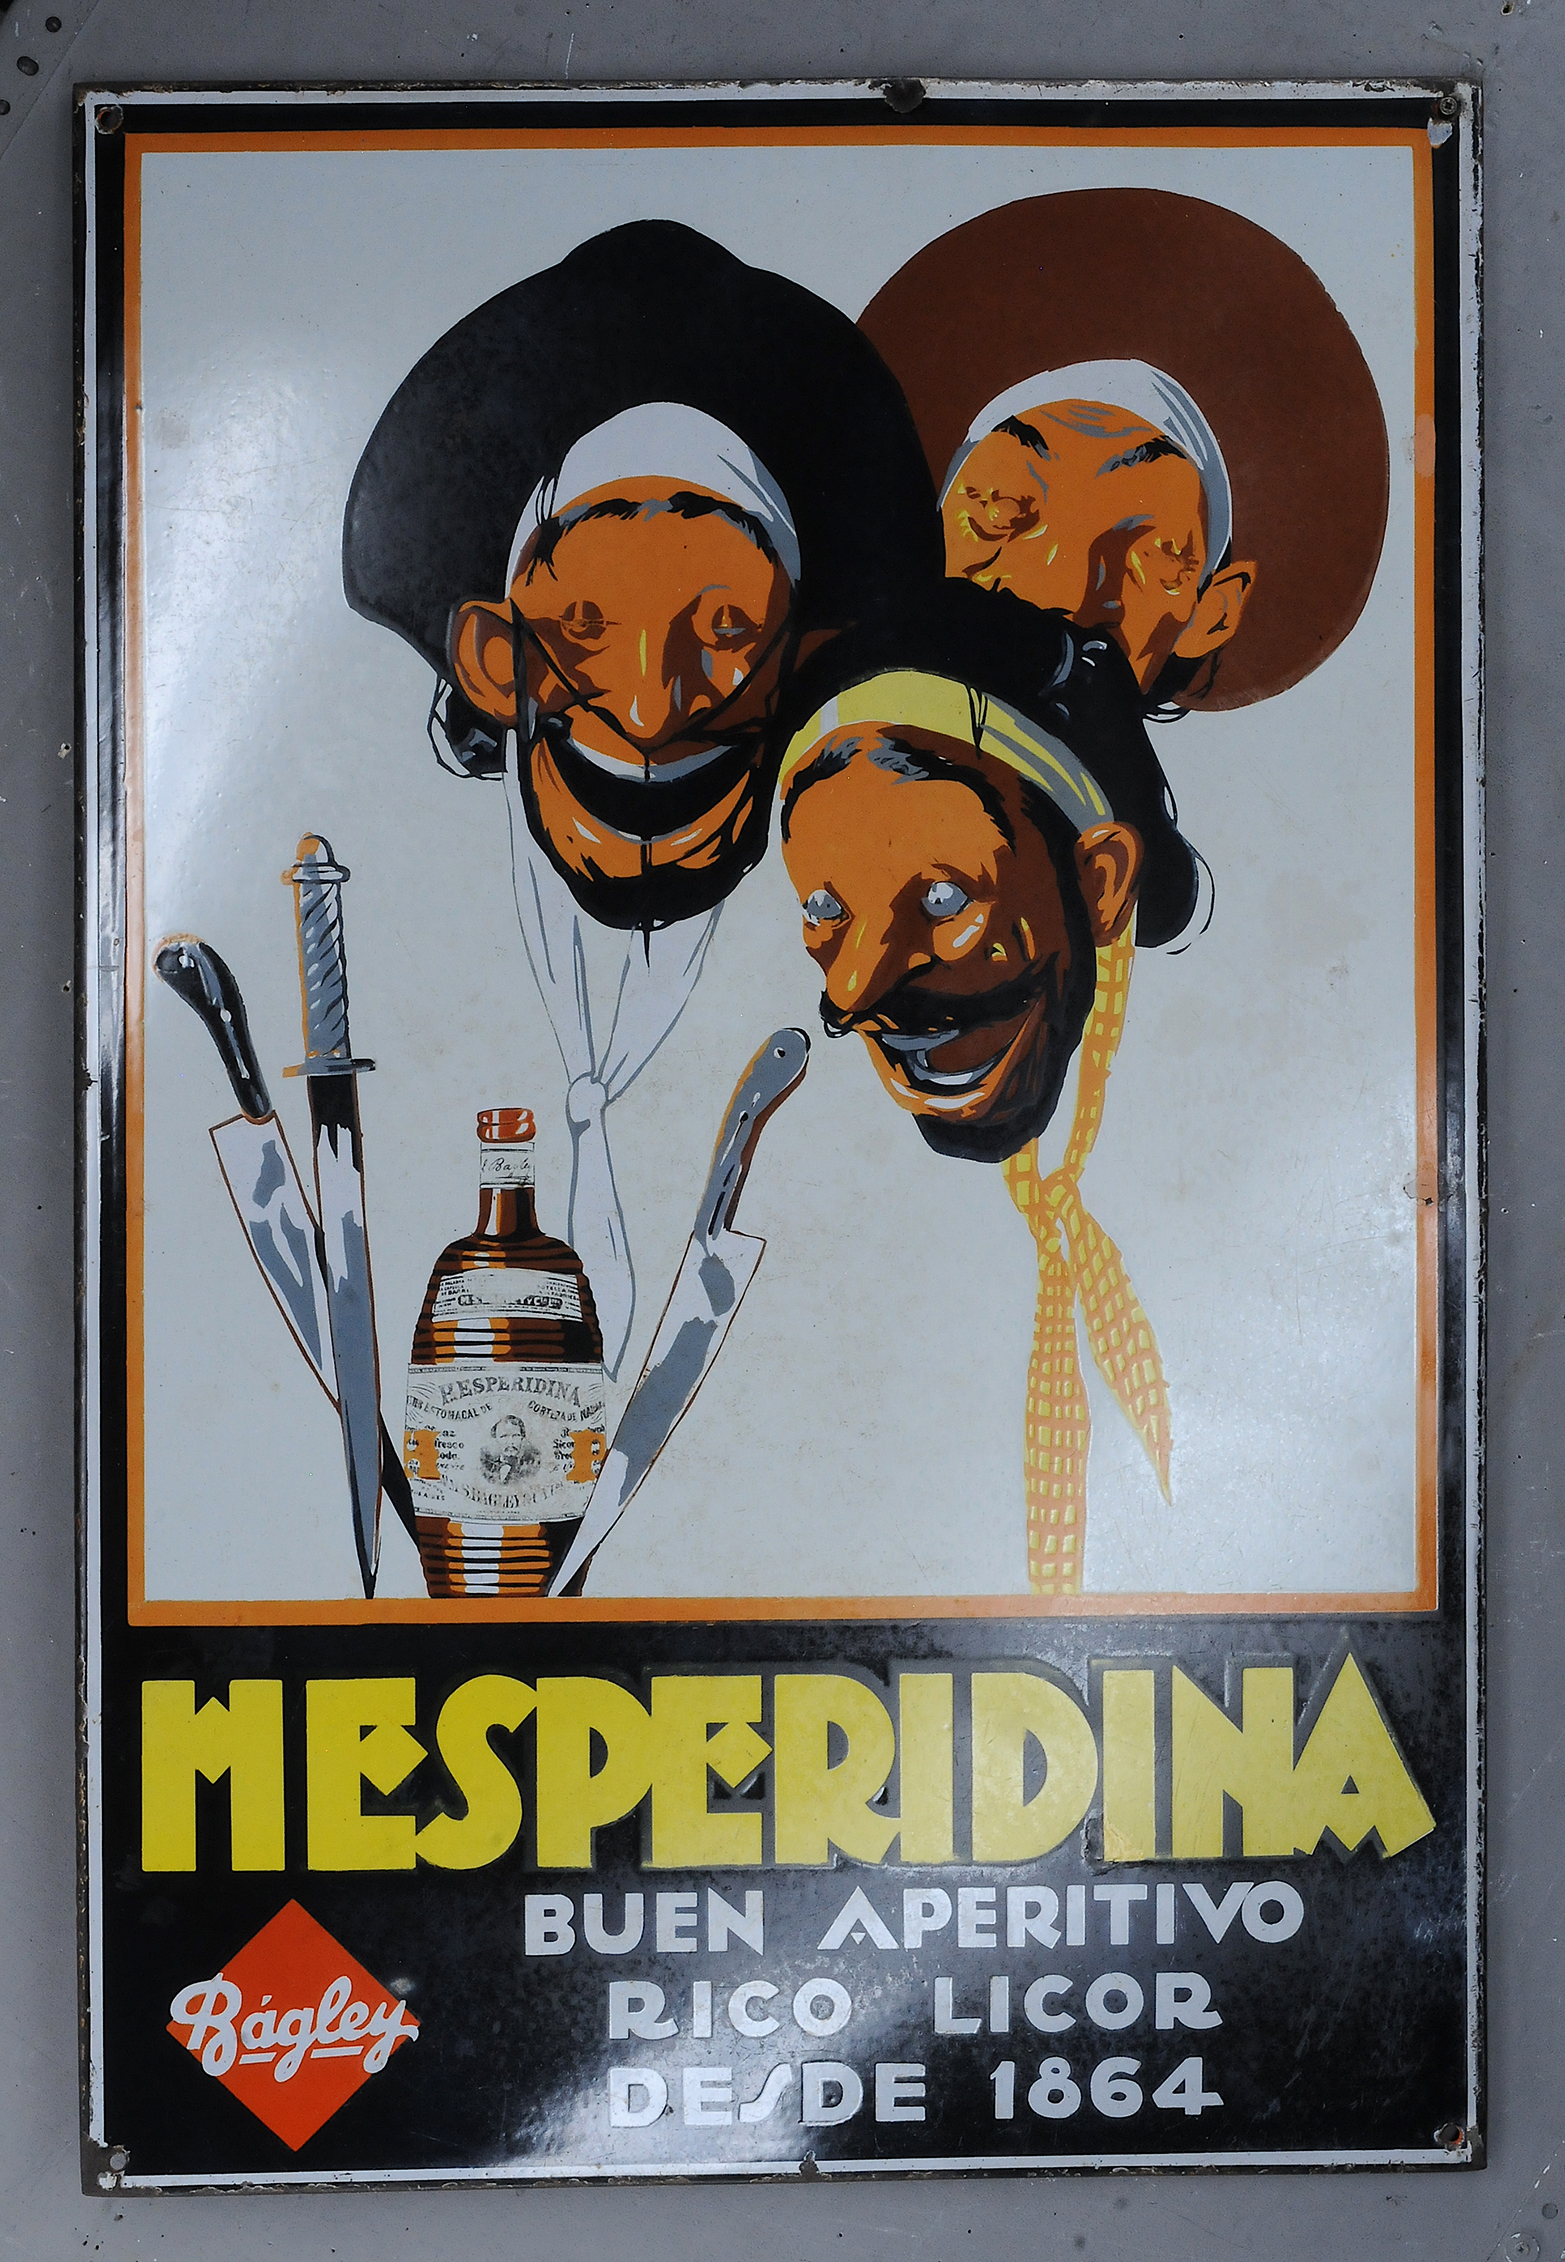 Hesperidina Aperitivo Licor - Image 3 of 4